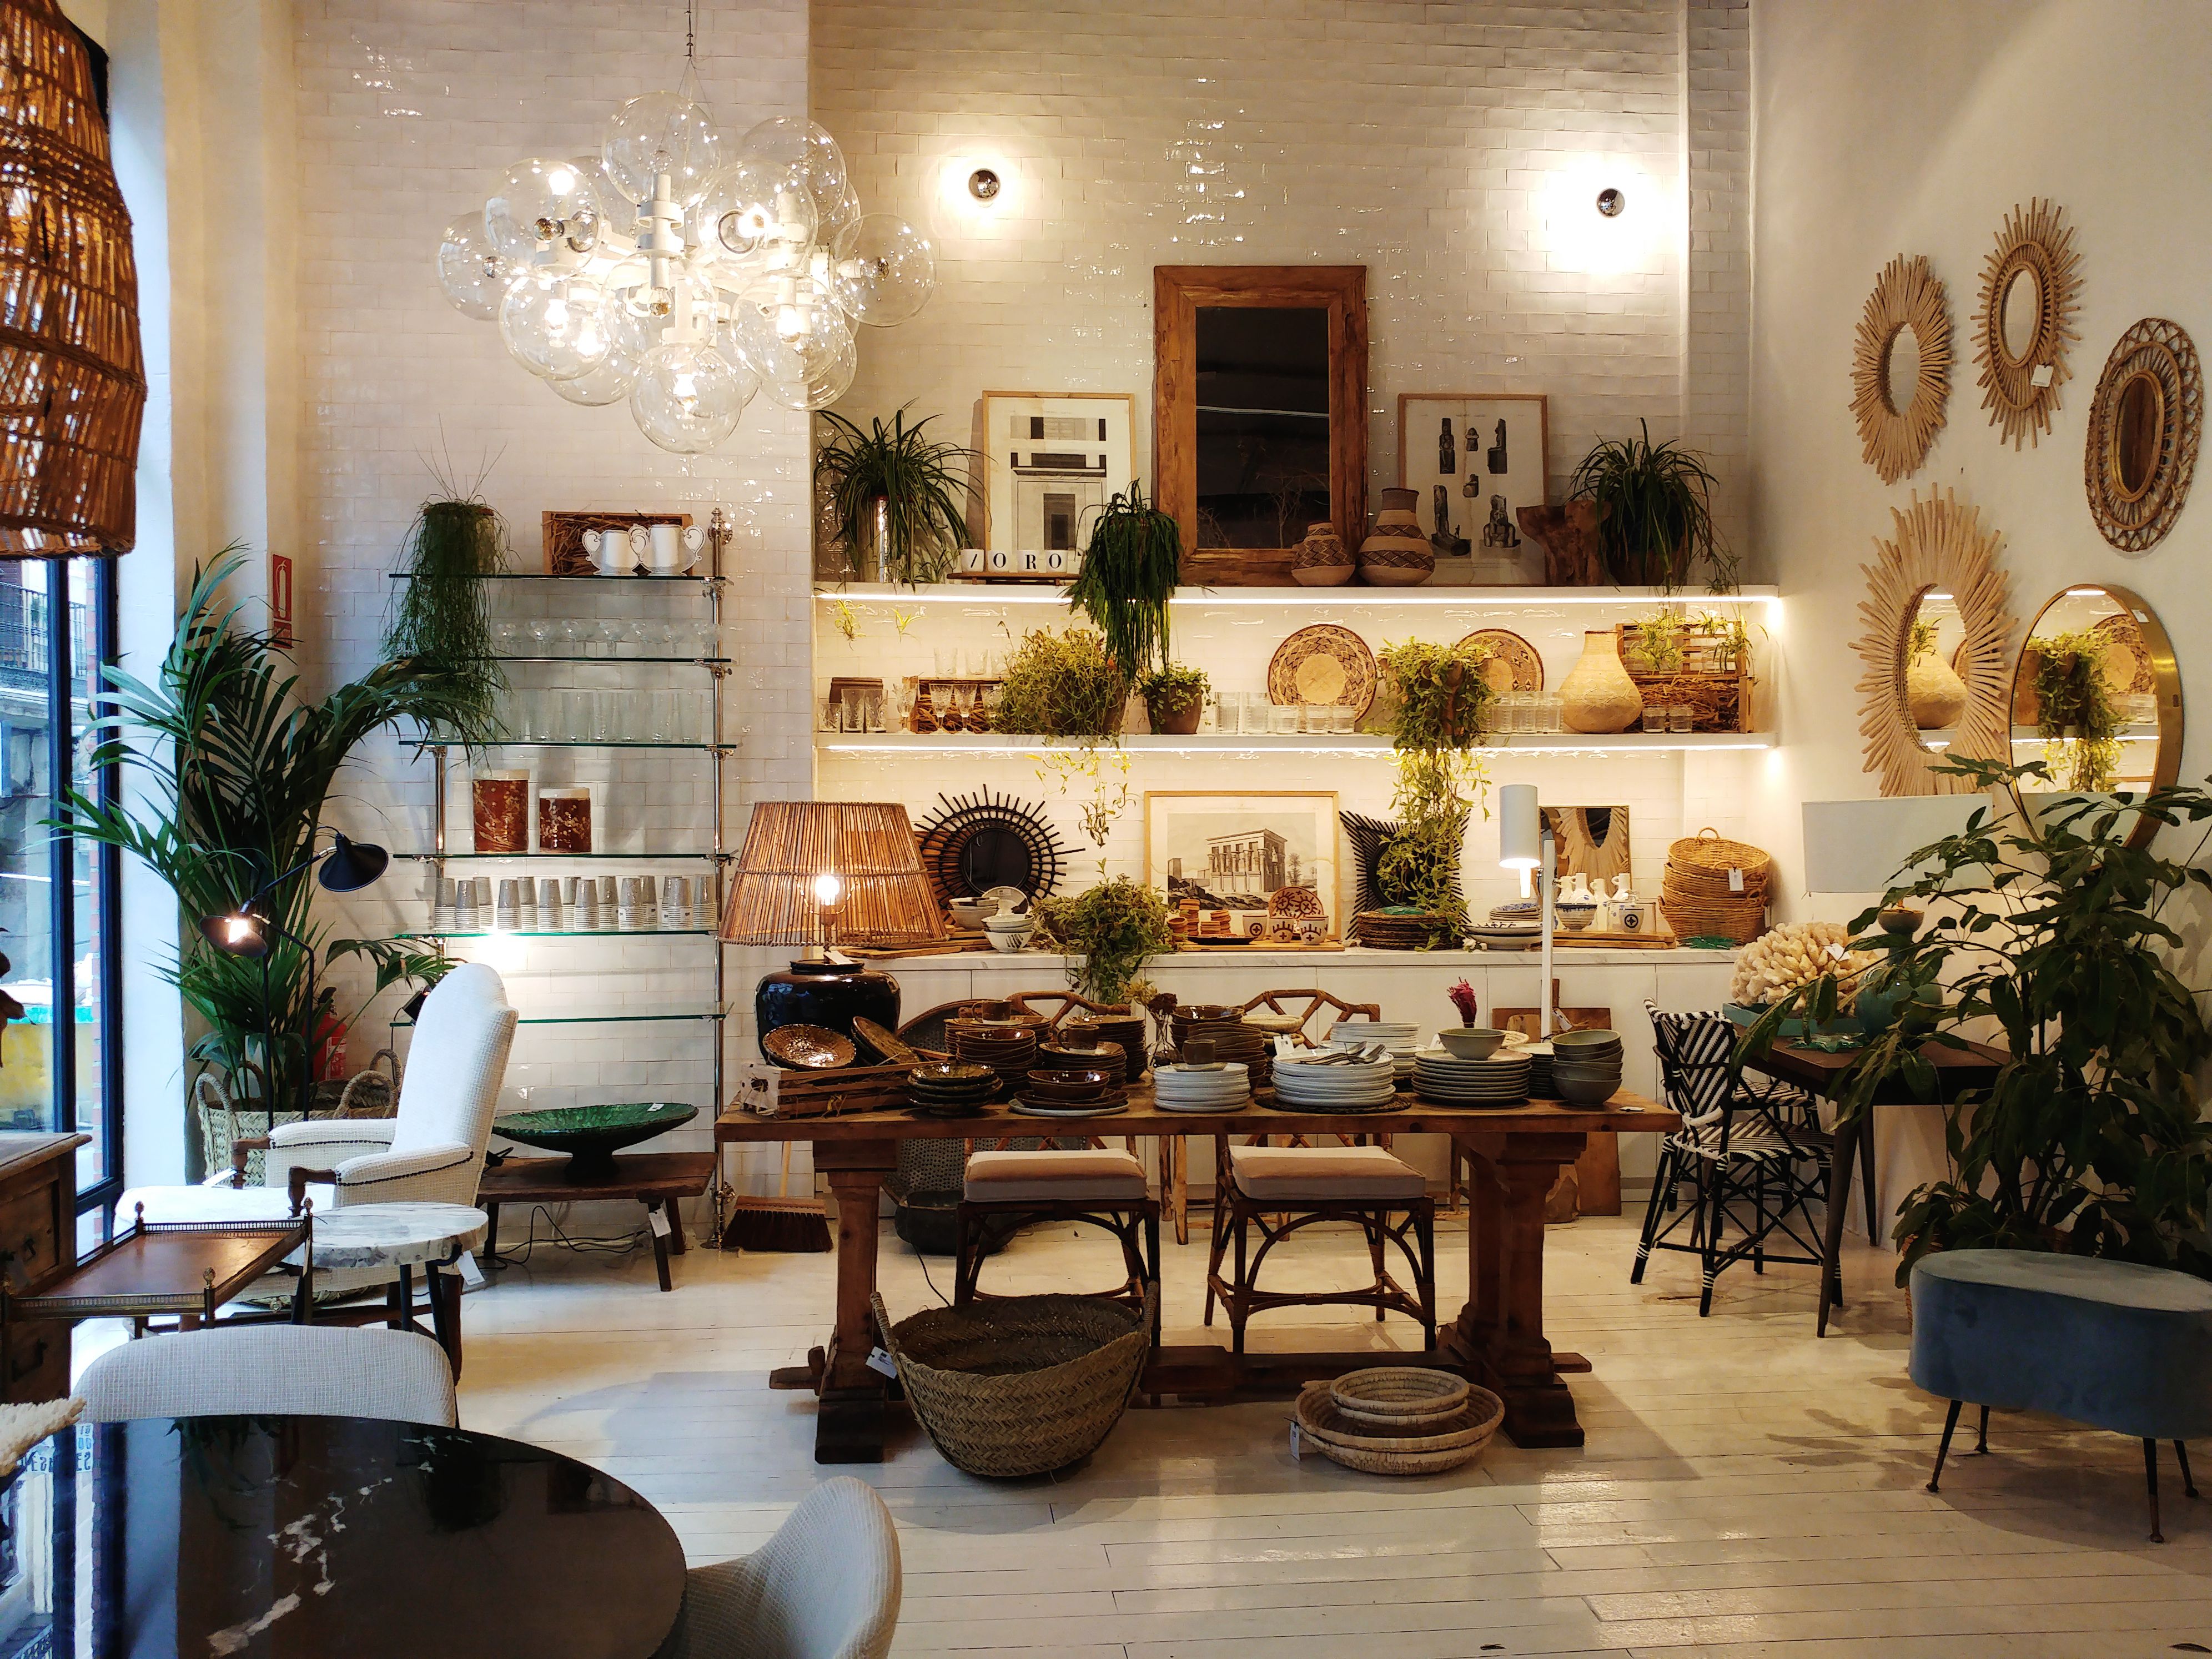 Mestizo furniture and home decor shop in Chueca, Madrid